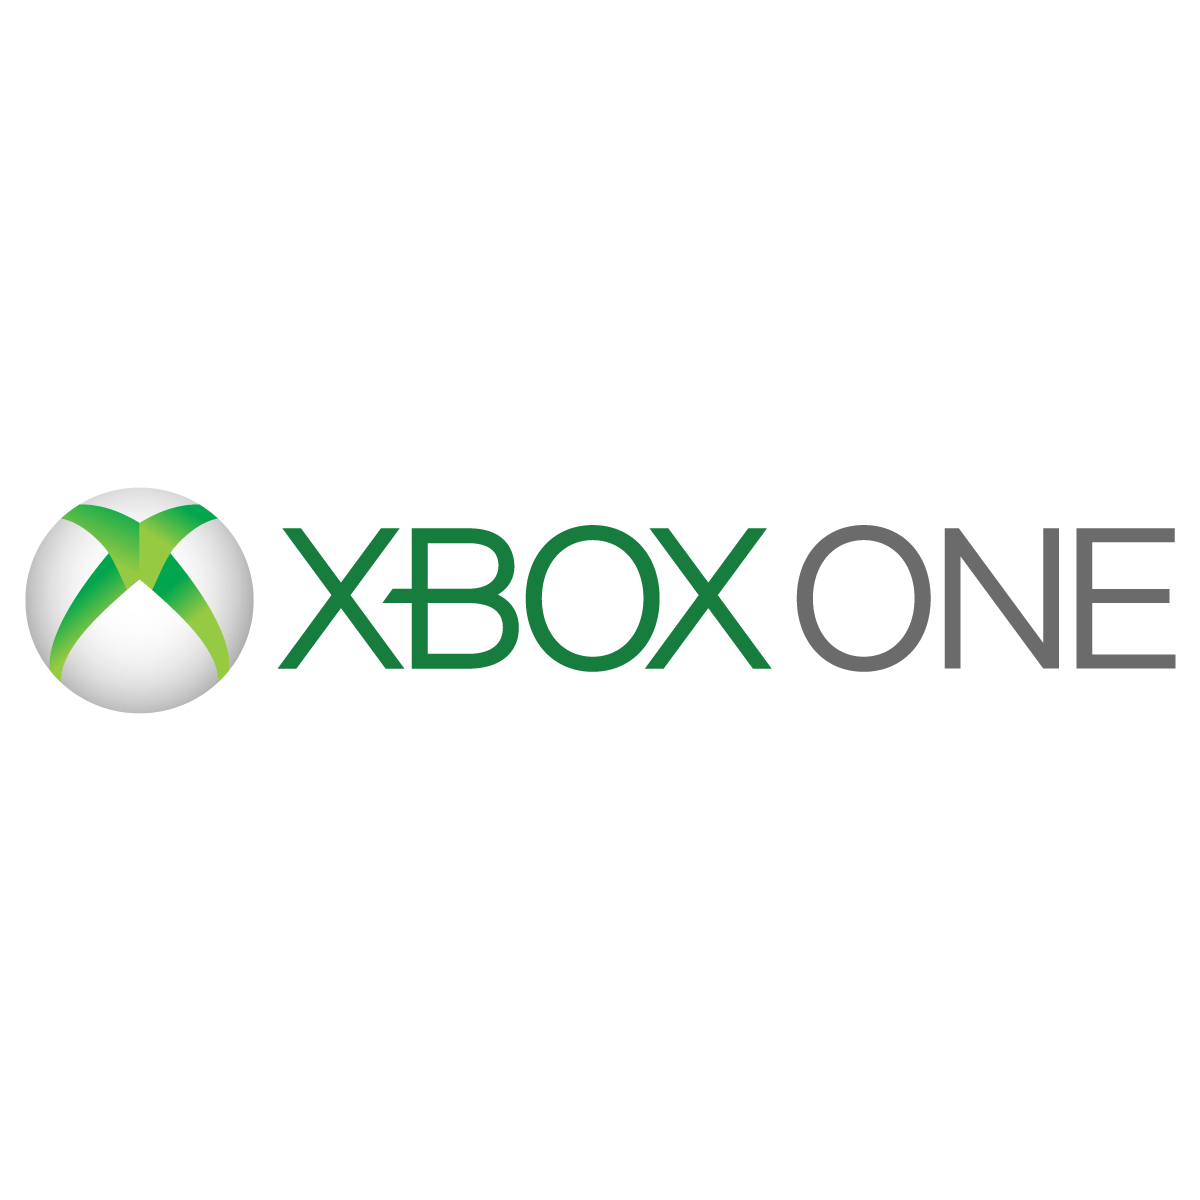 Xbone Logo - Xbox One Logo Vector 3D. Free Vector Silhouette Graphics AI EPS SVG